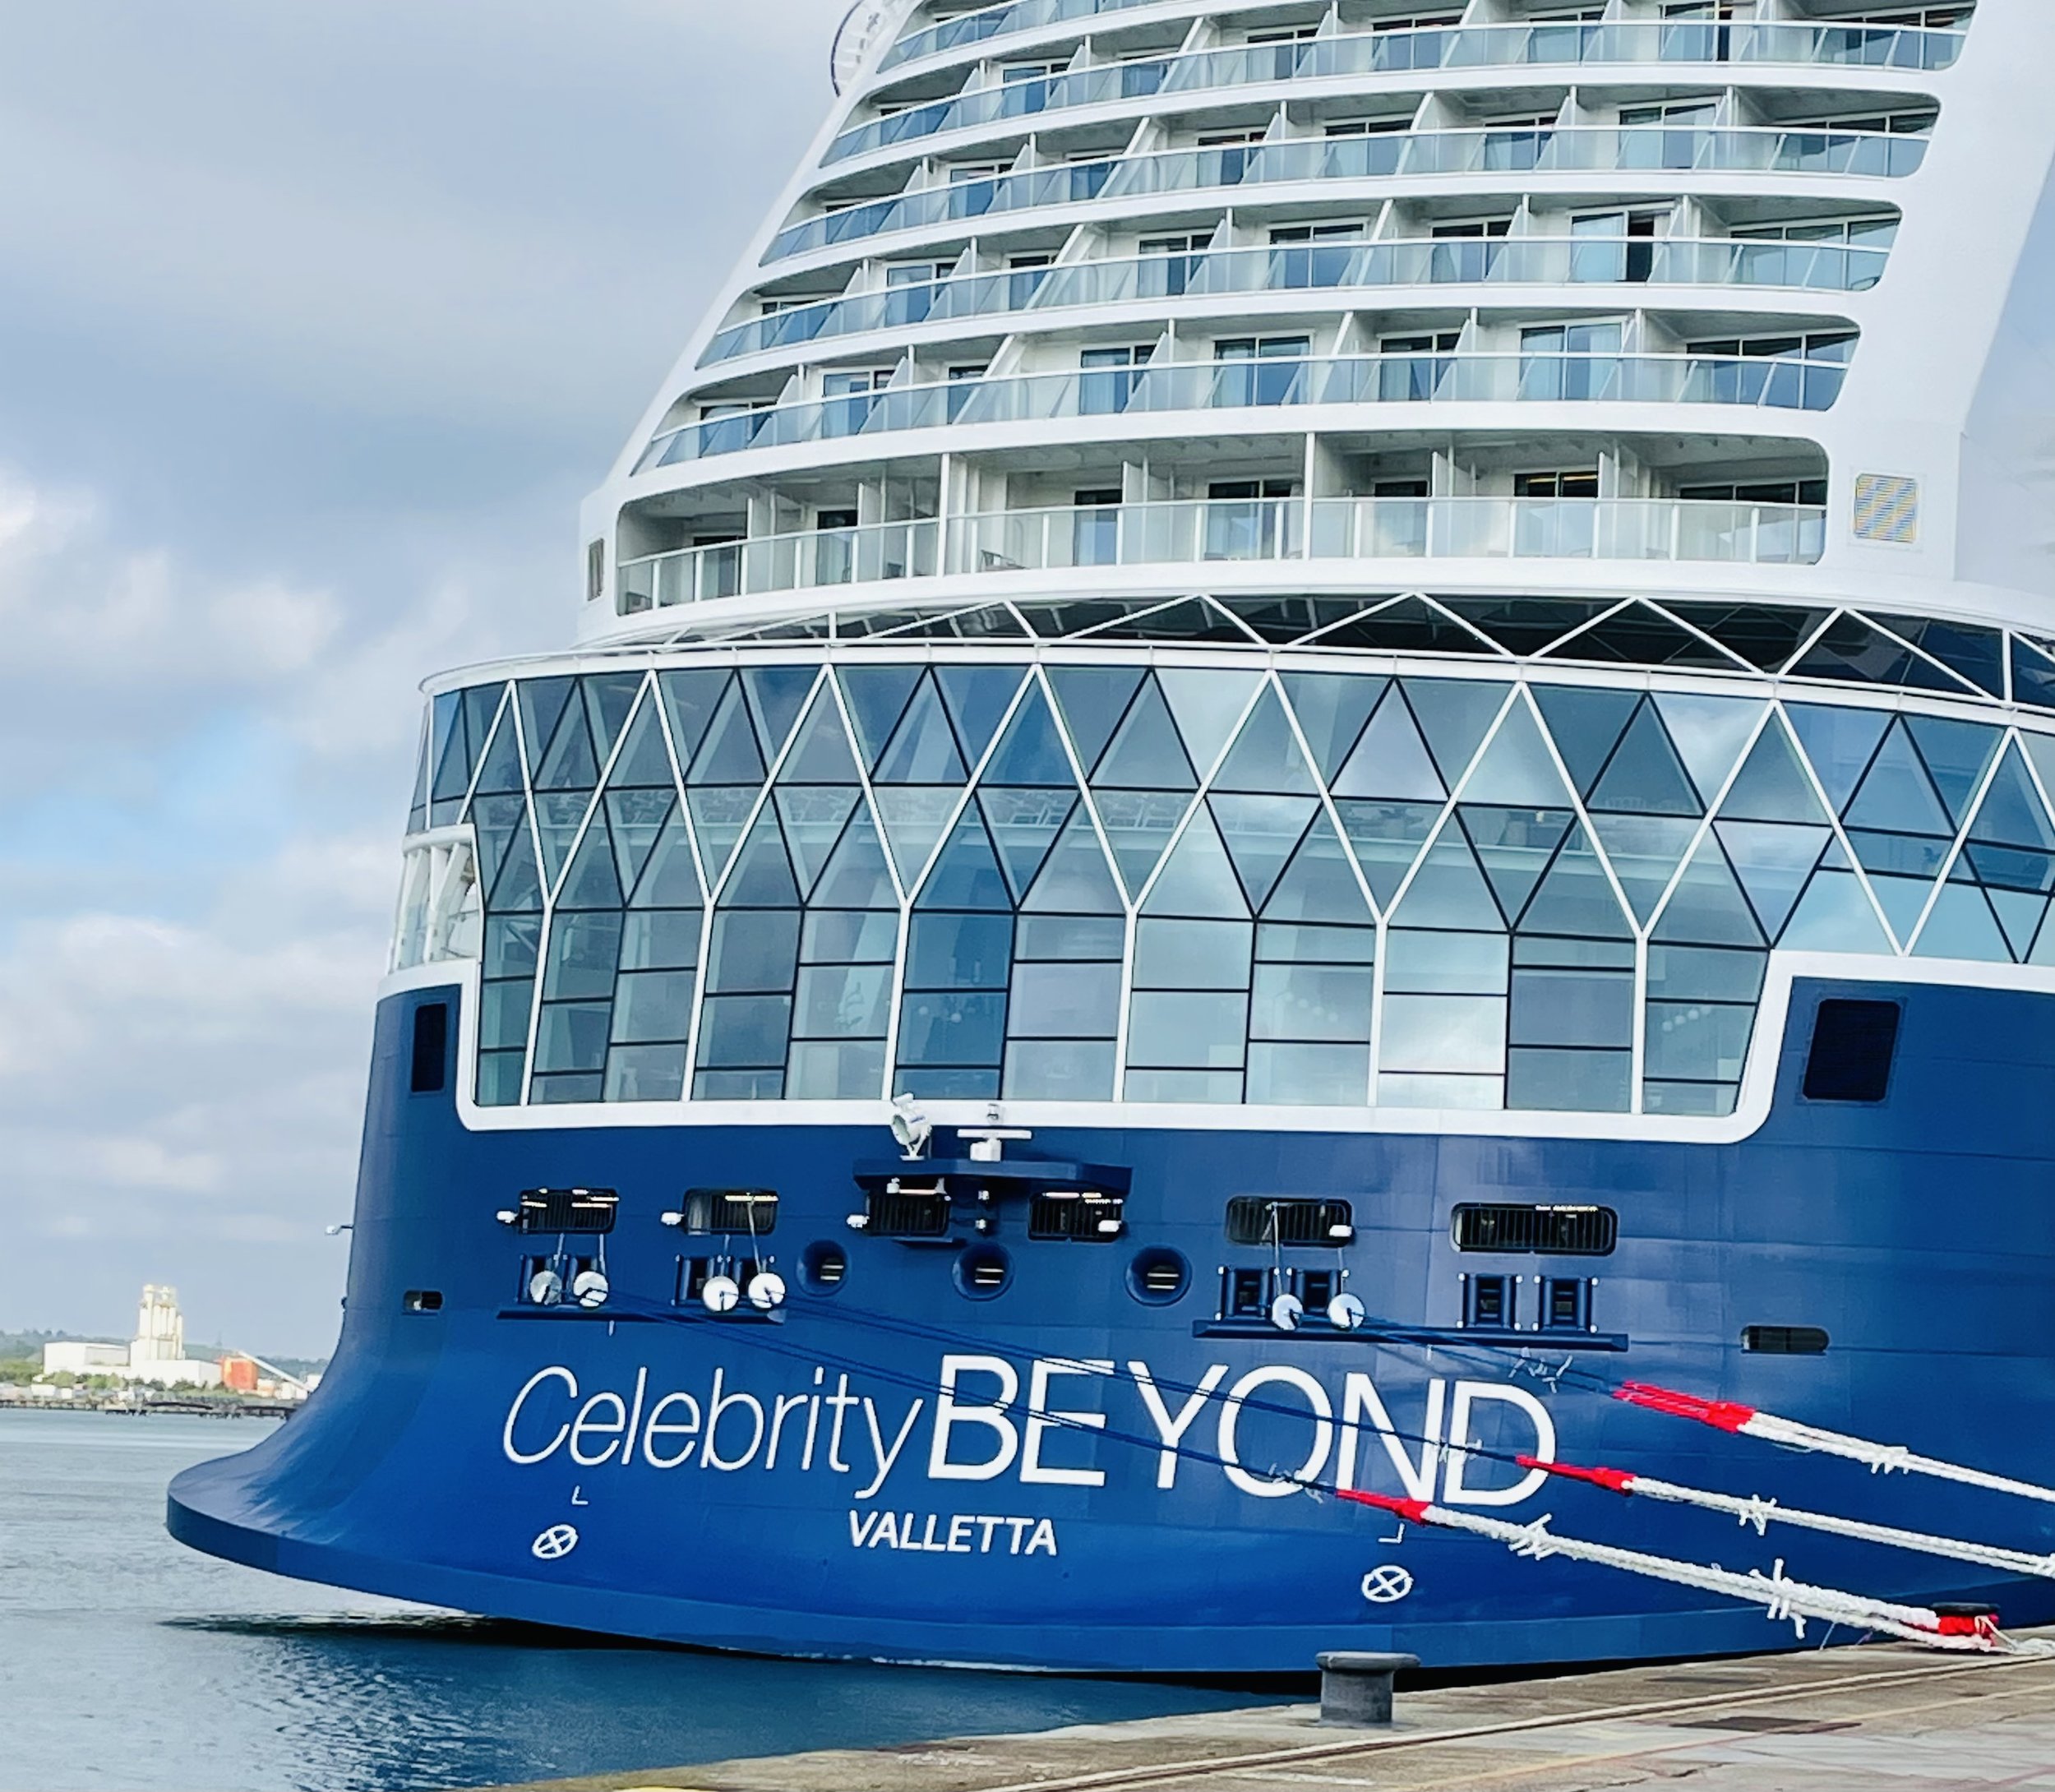 celebrity beyond cruise director luigi